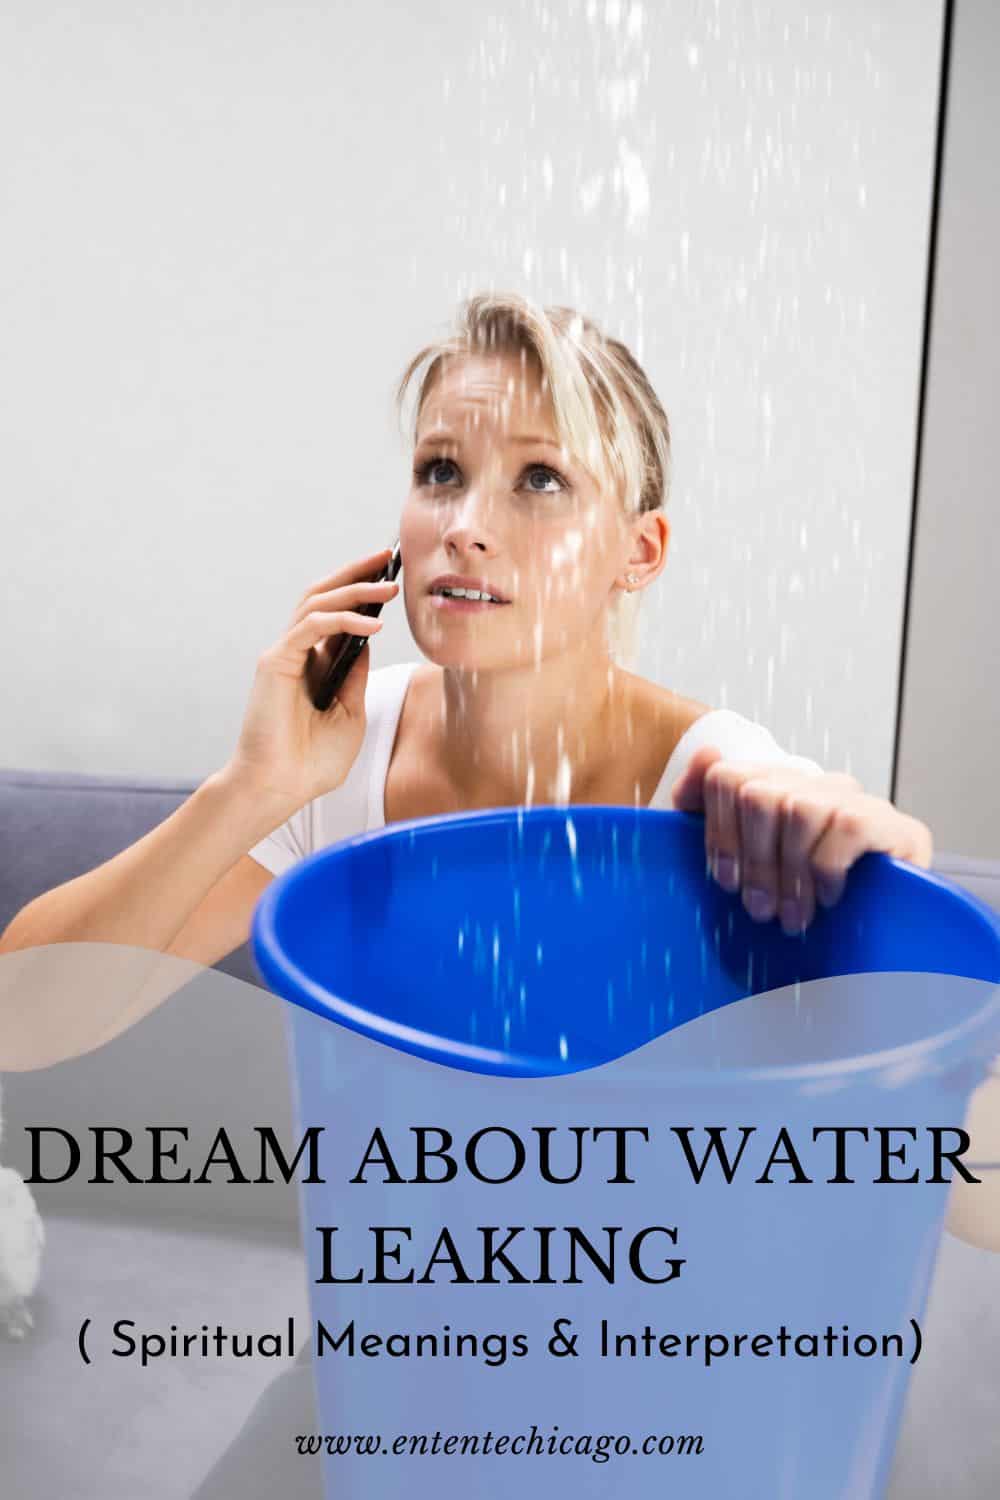 Dream About Water Leaking ( Spiritual Meanings & Interpretation)